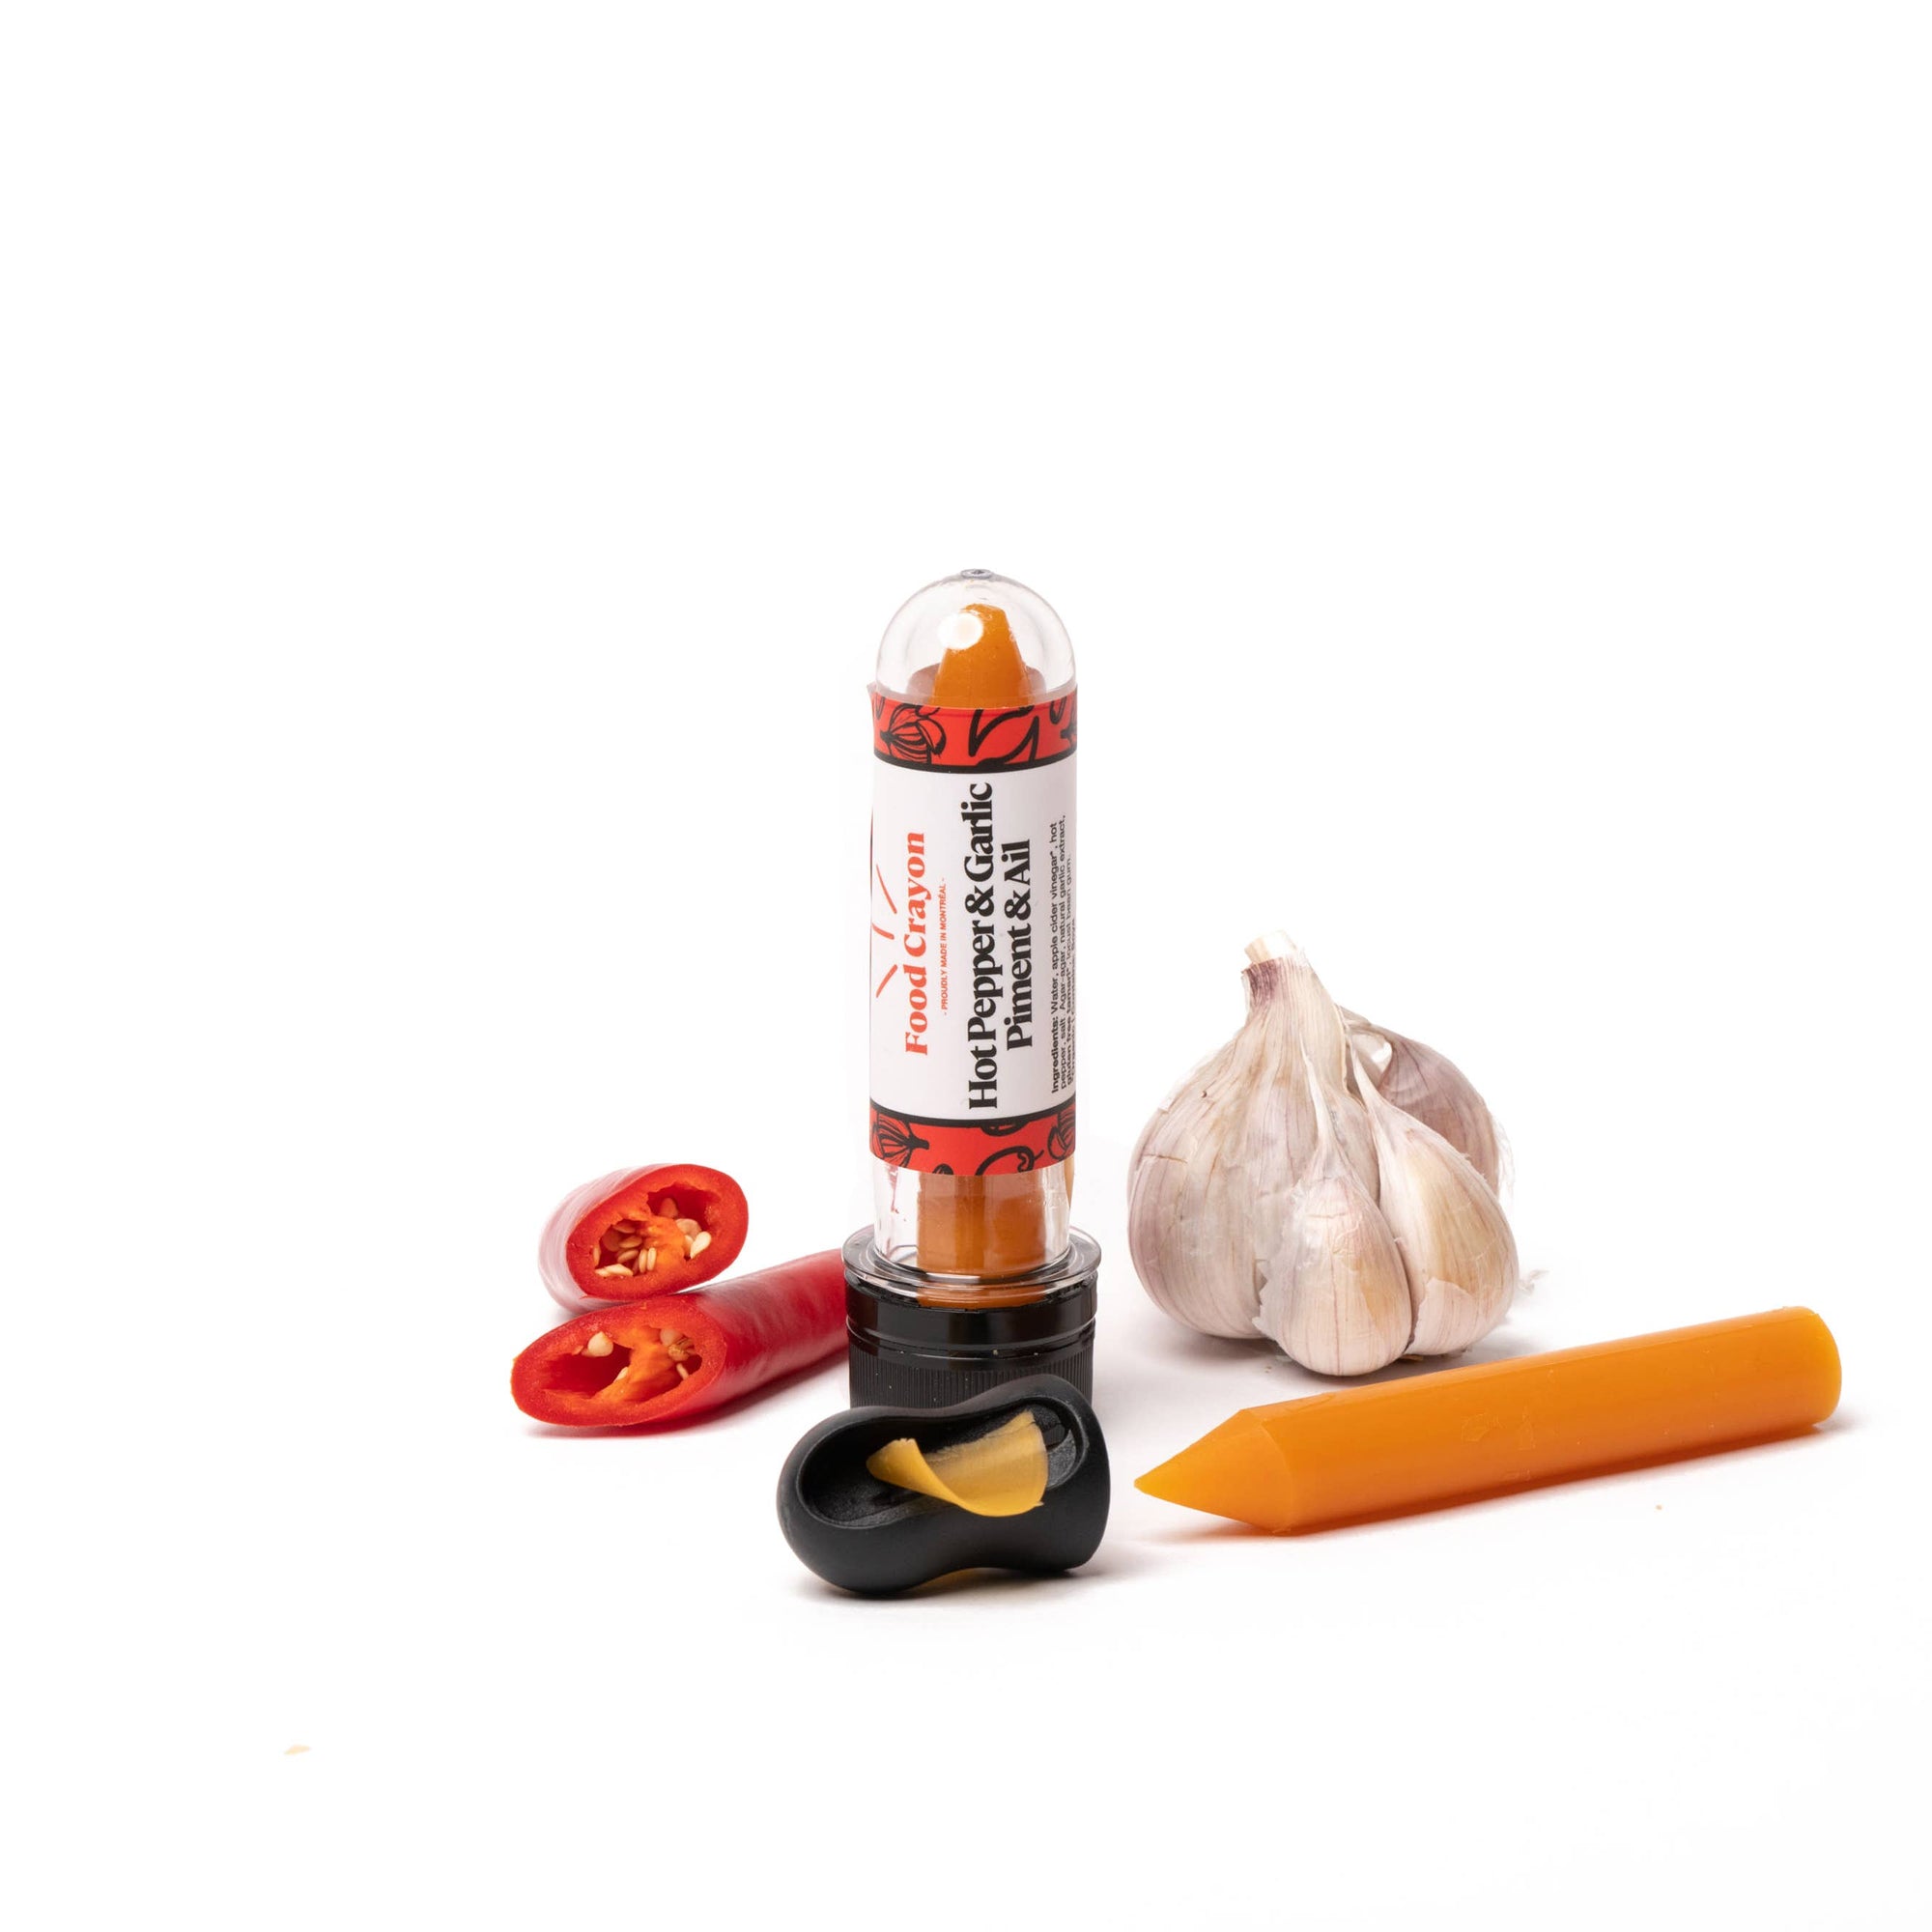 Chili & Garlic - Single Box (1 Food Crayon + 1 Sharpener)